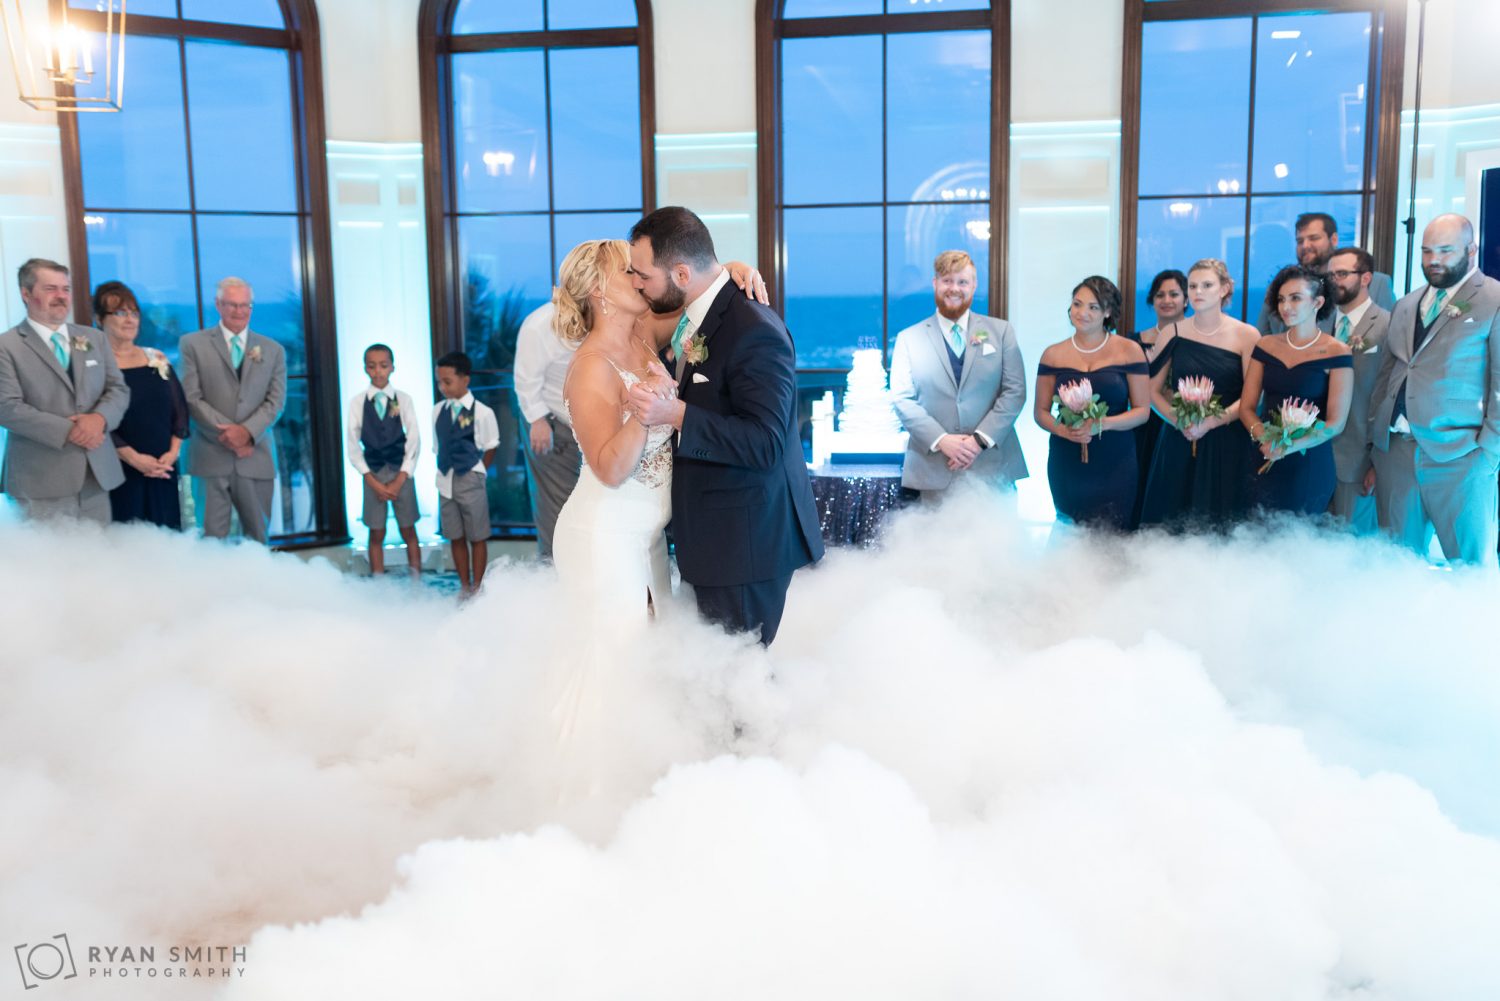 Kiss in the First dance with fog machine Grande Dunes Ocean Club